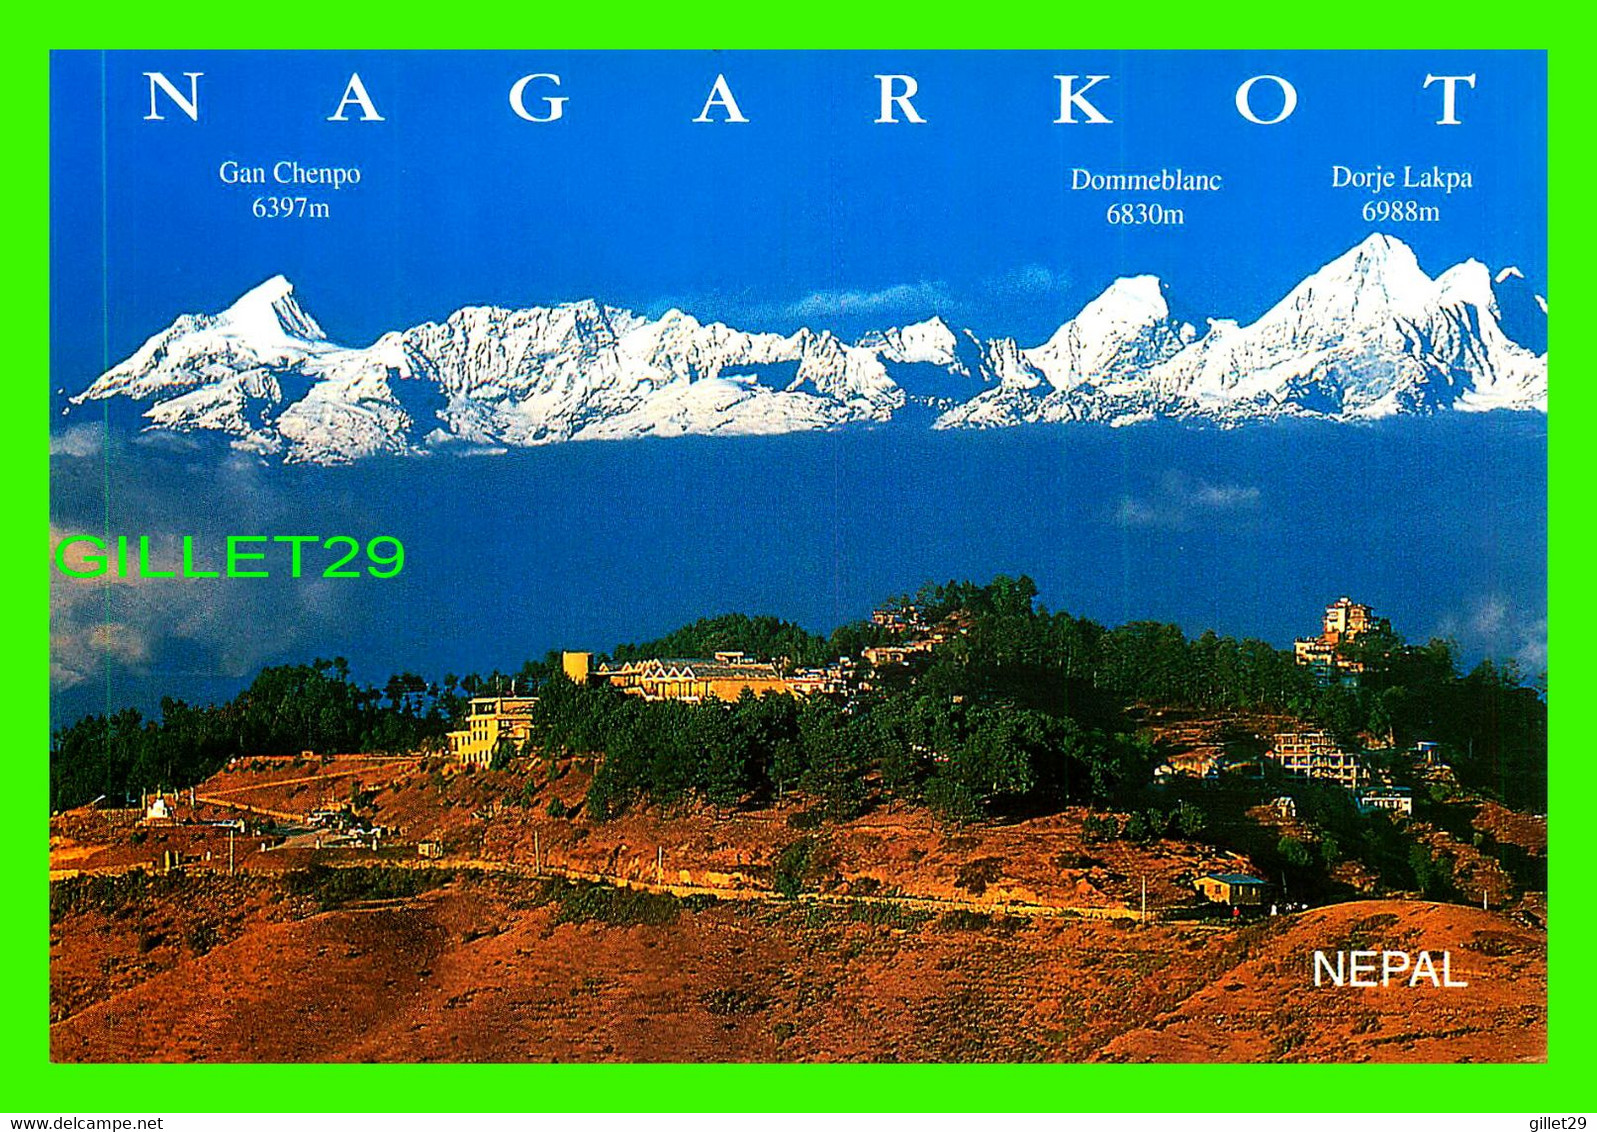 NAGARKOT, NÉPAL - LANGTANG RANGE FROM MT. NAGARKOT - PHOTO, DILIP B. ALI - - Népal